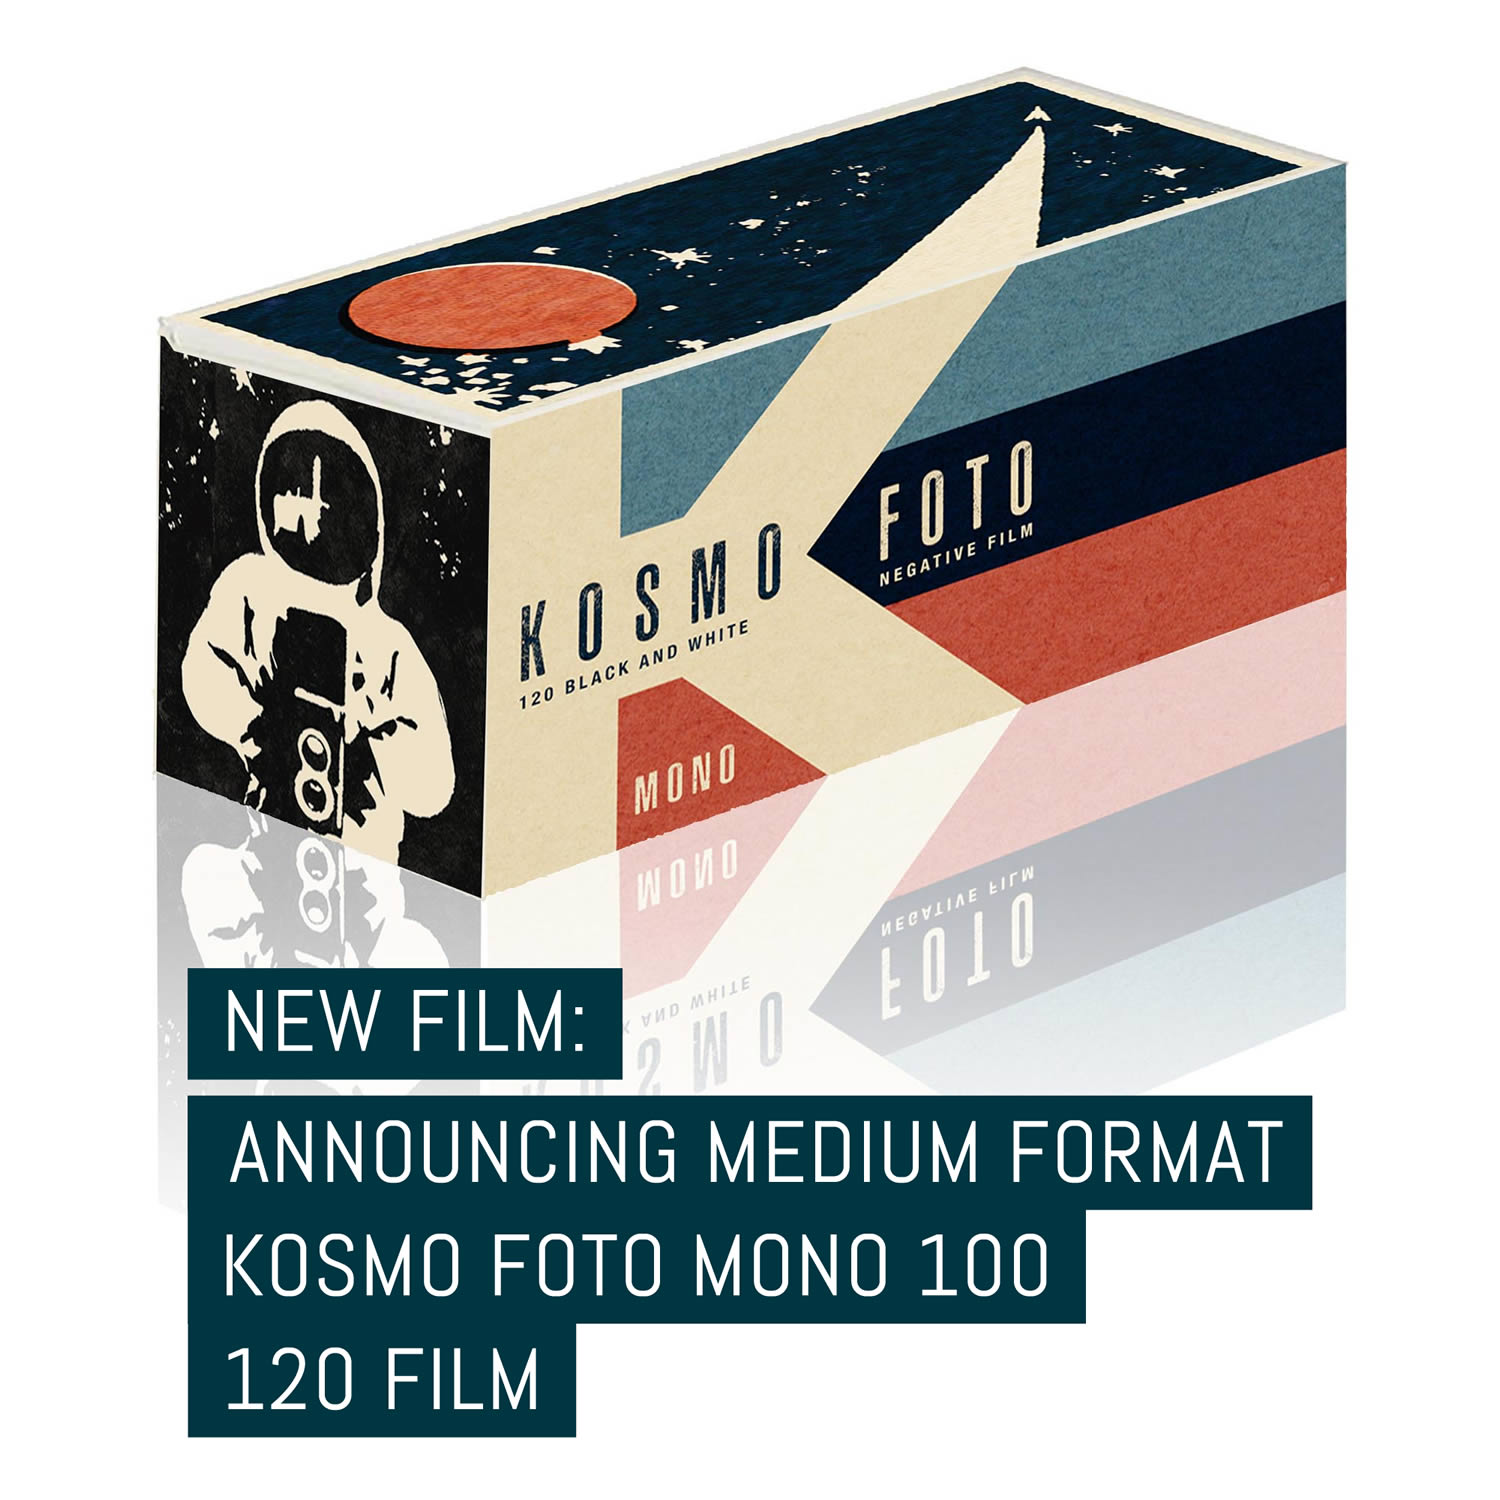 New film: announcing medium format Kosmo Foto Mono 100 120 format film